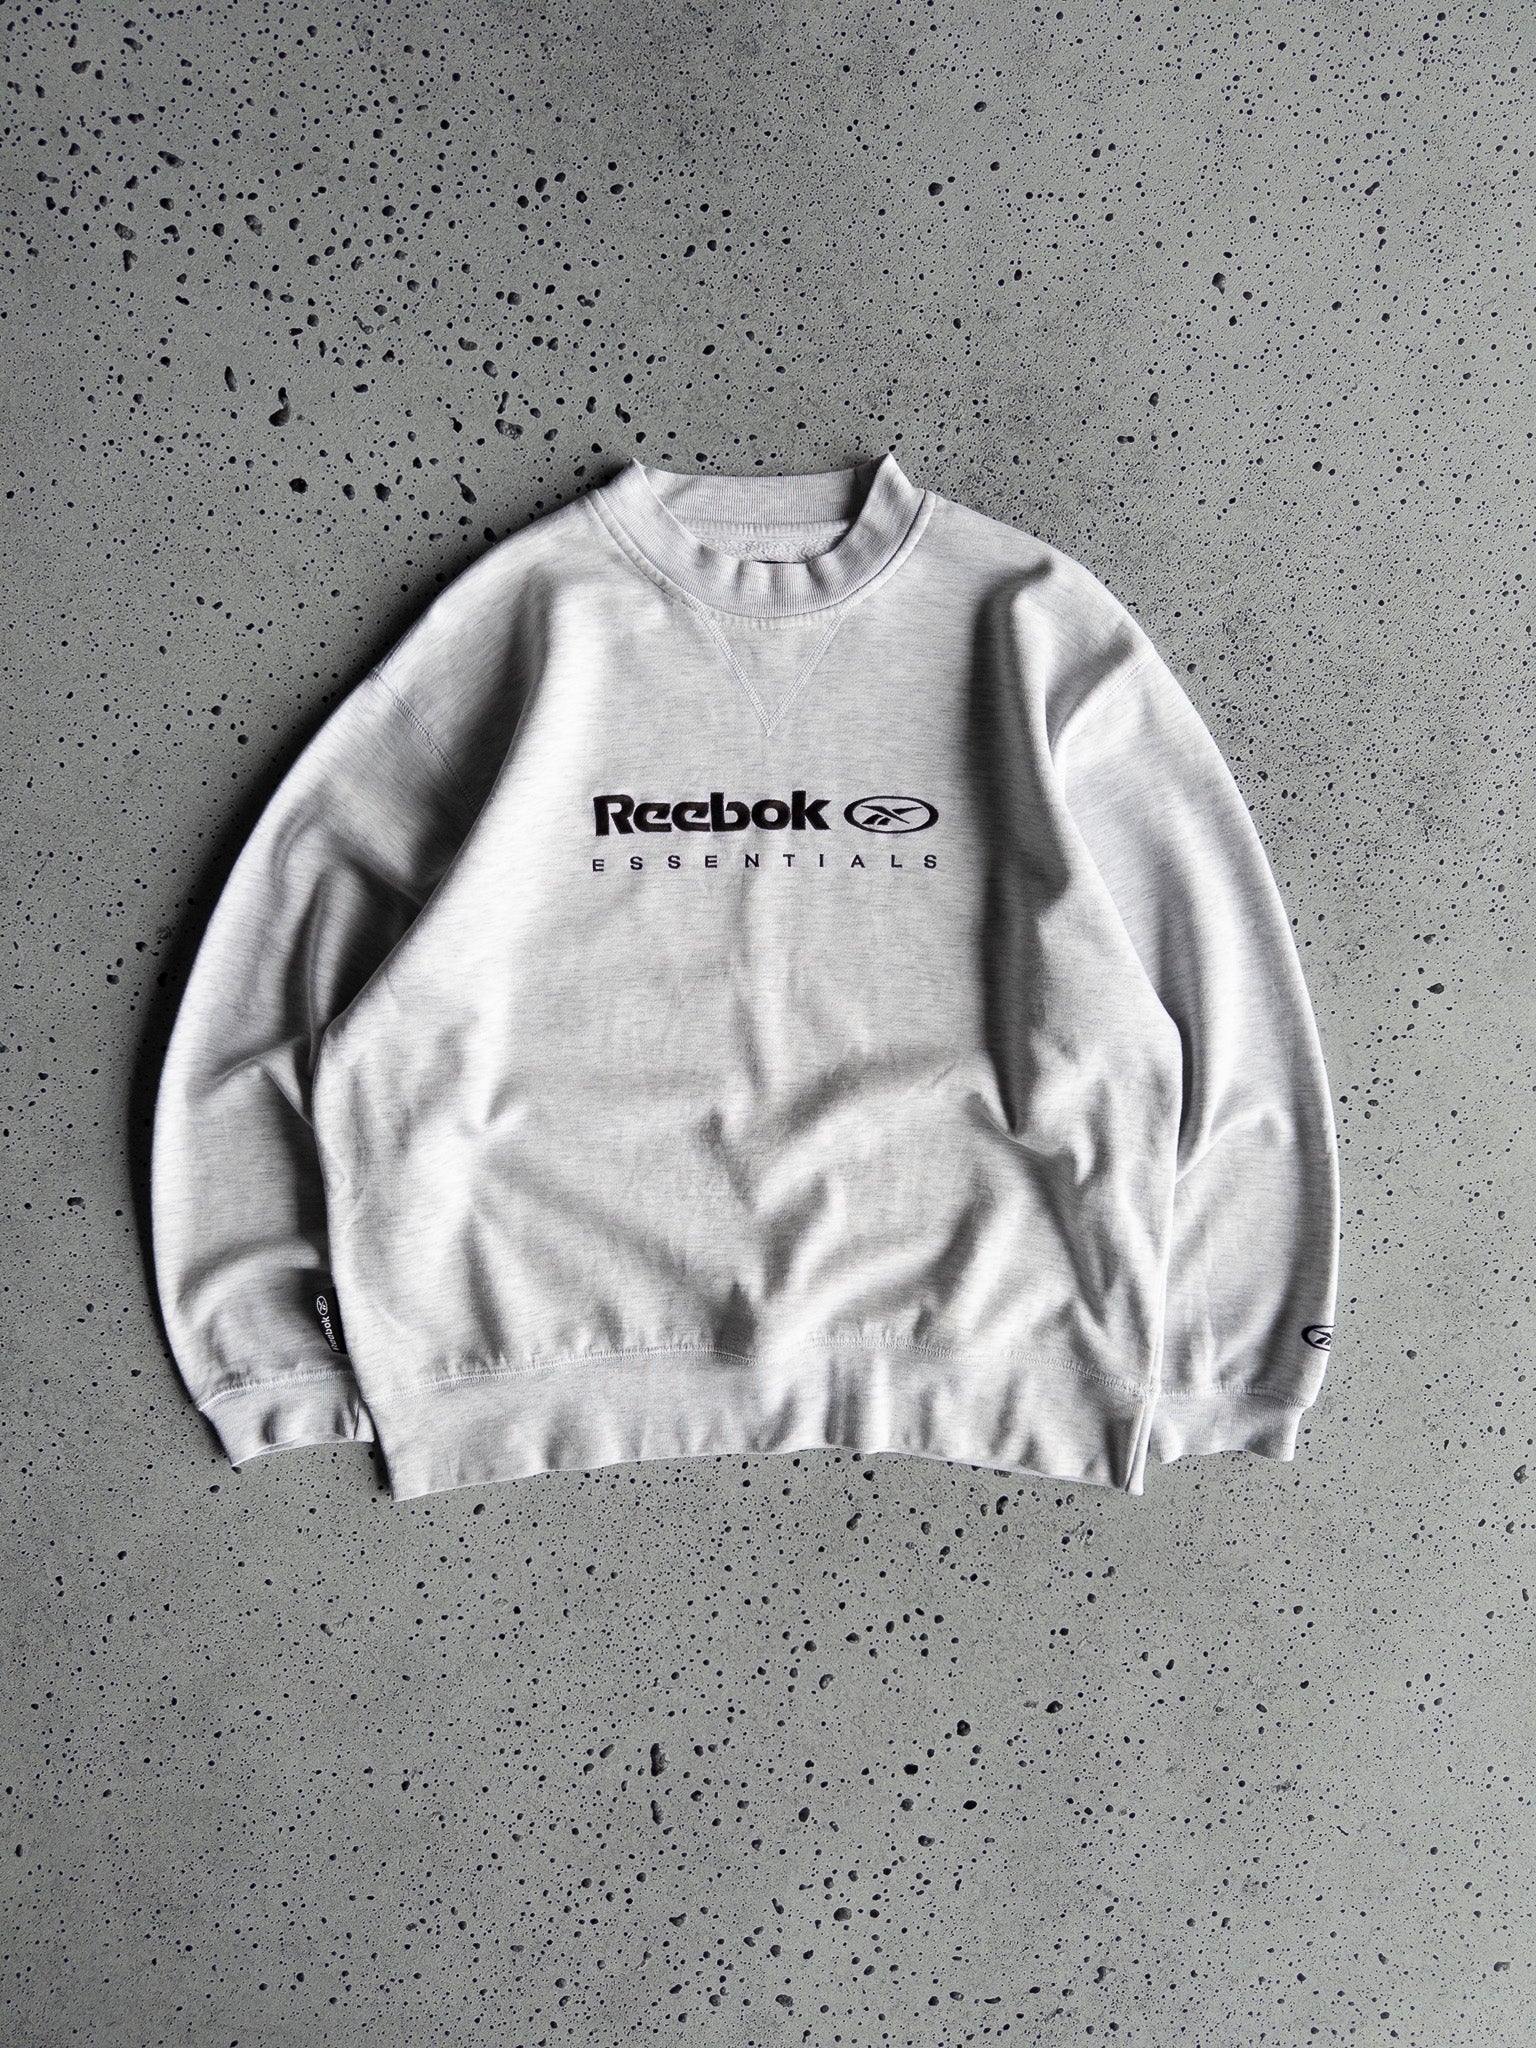 Vintage Reebok Essentials Sweatshirt (L)